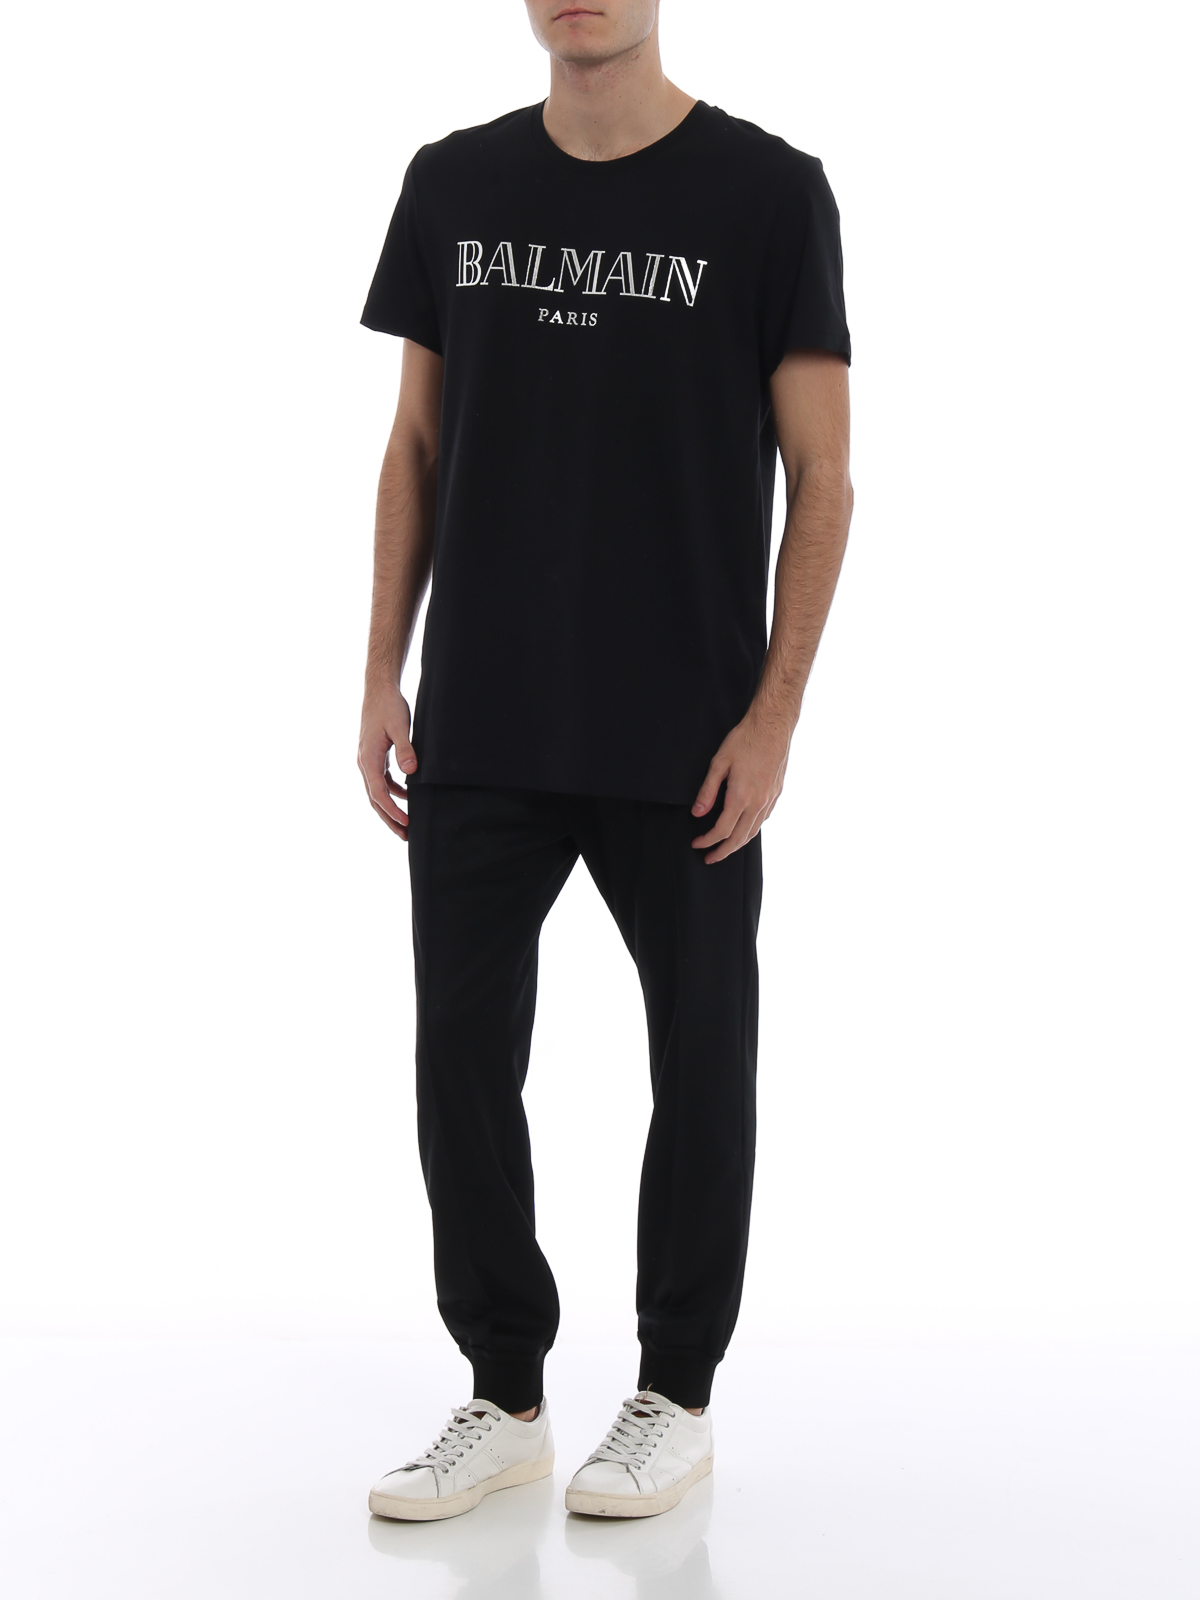 Tシャツ Balmain - Tシャツ - Balmain Paris - W8H8601I2581766